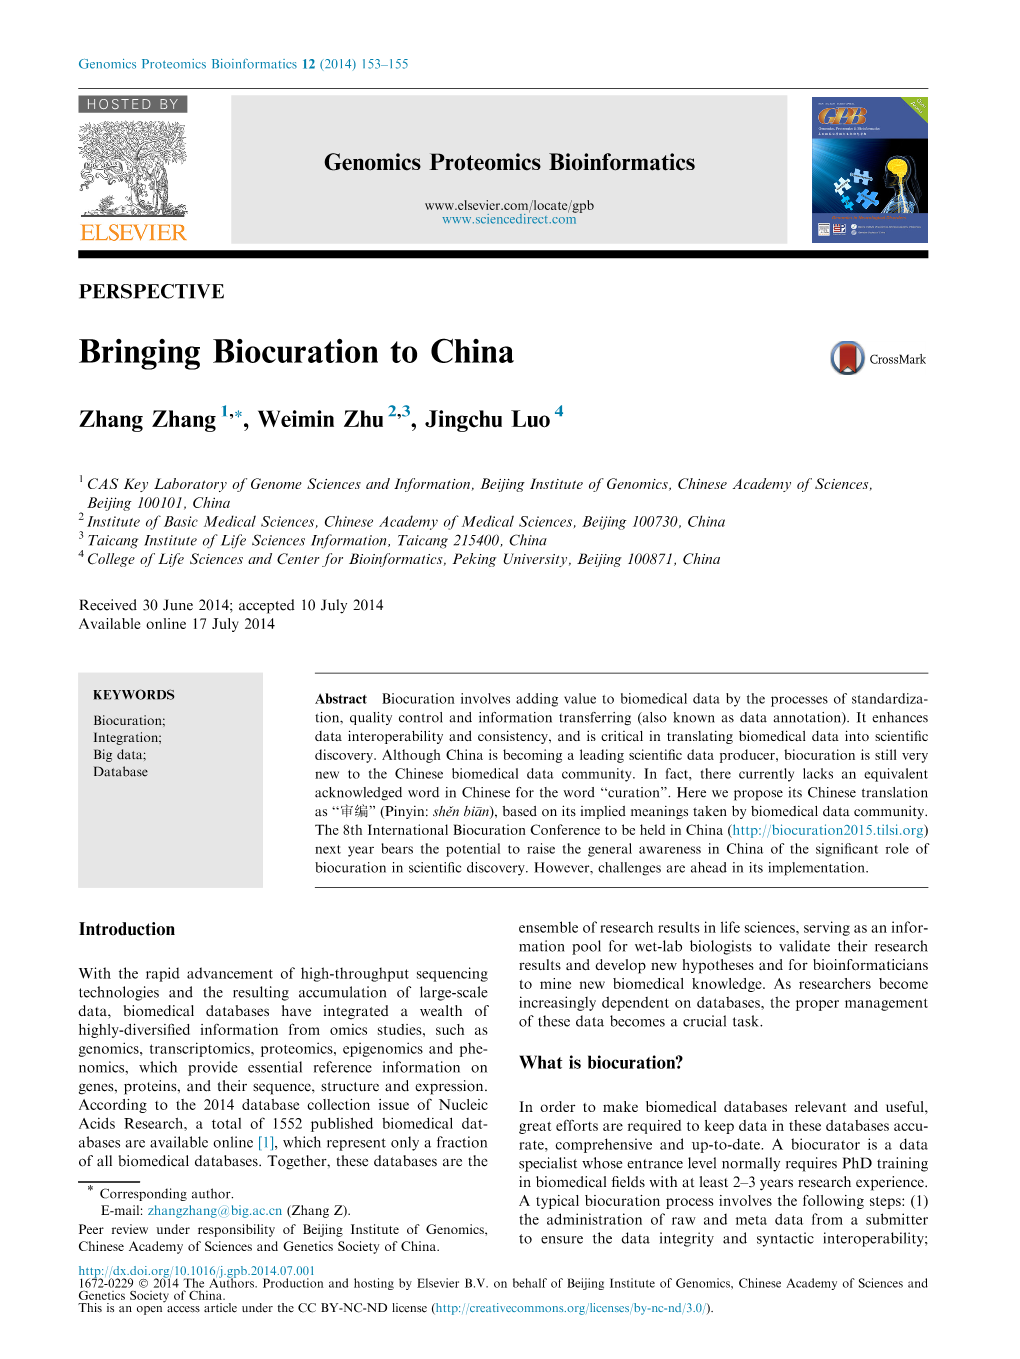 Bringing Biocuration to China